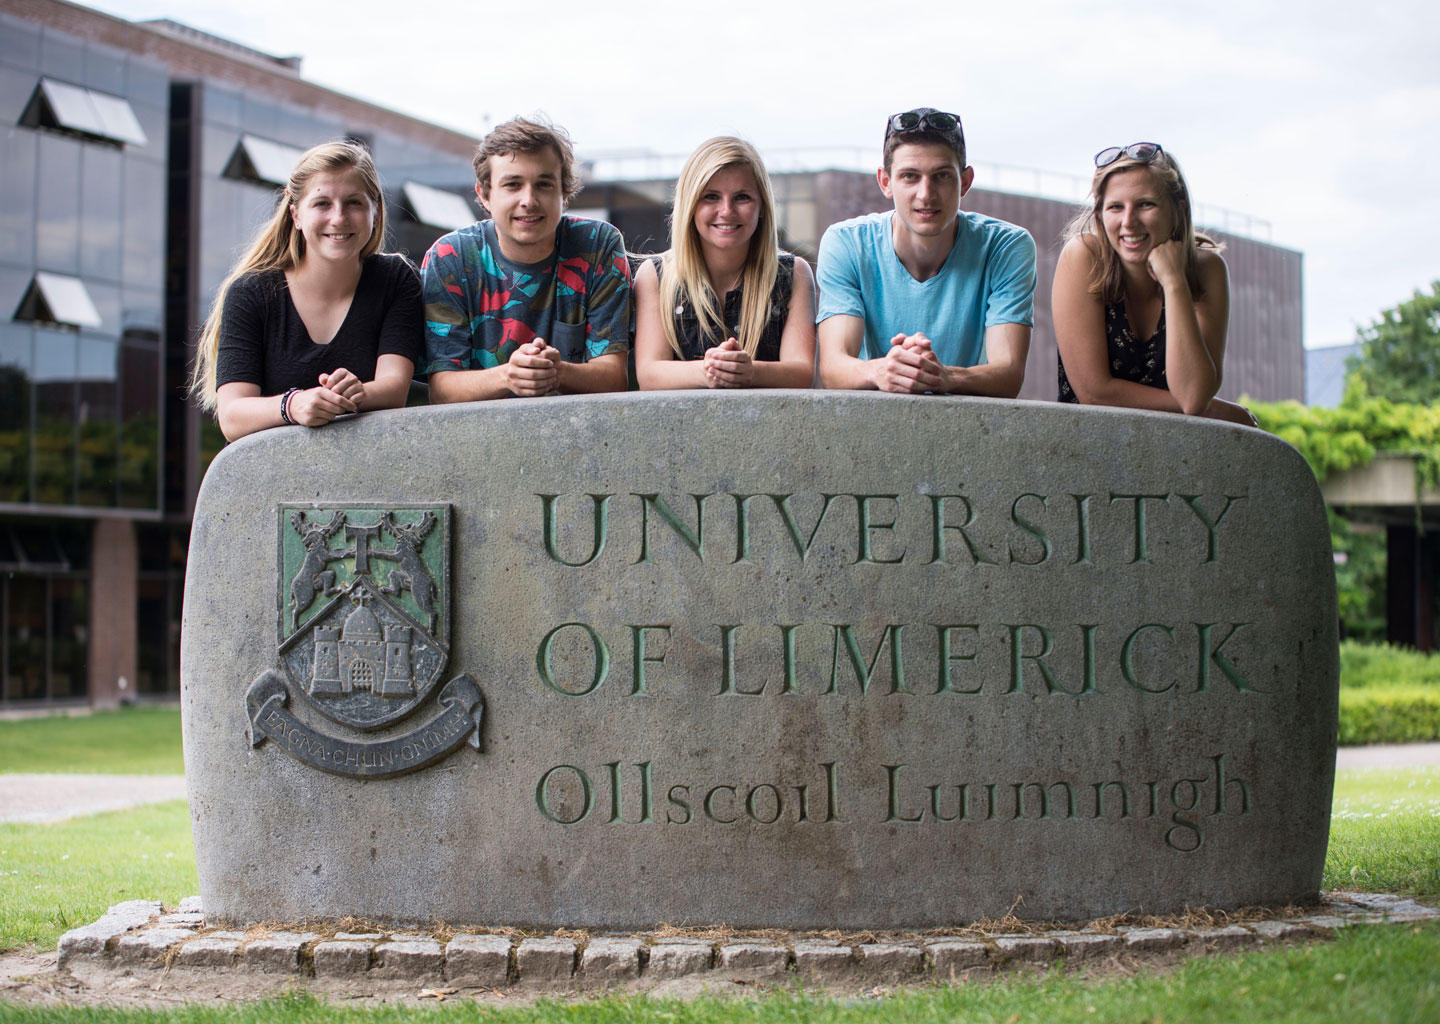 Limerick University